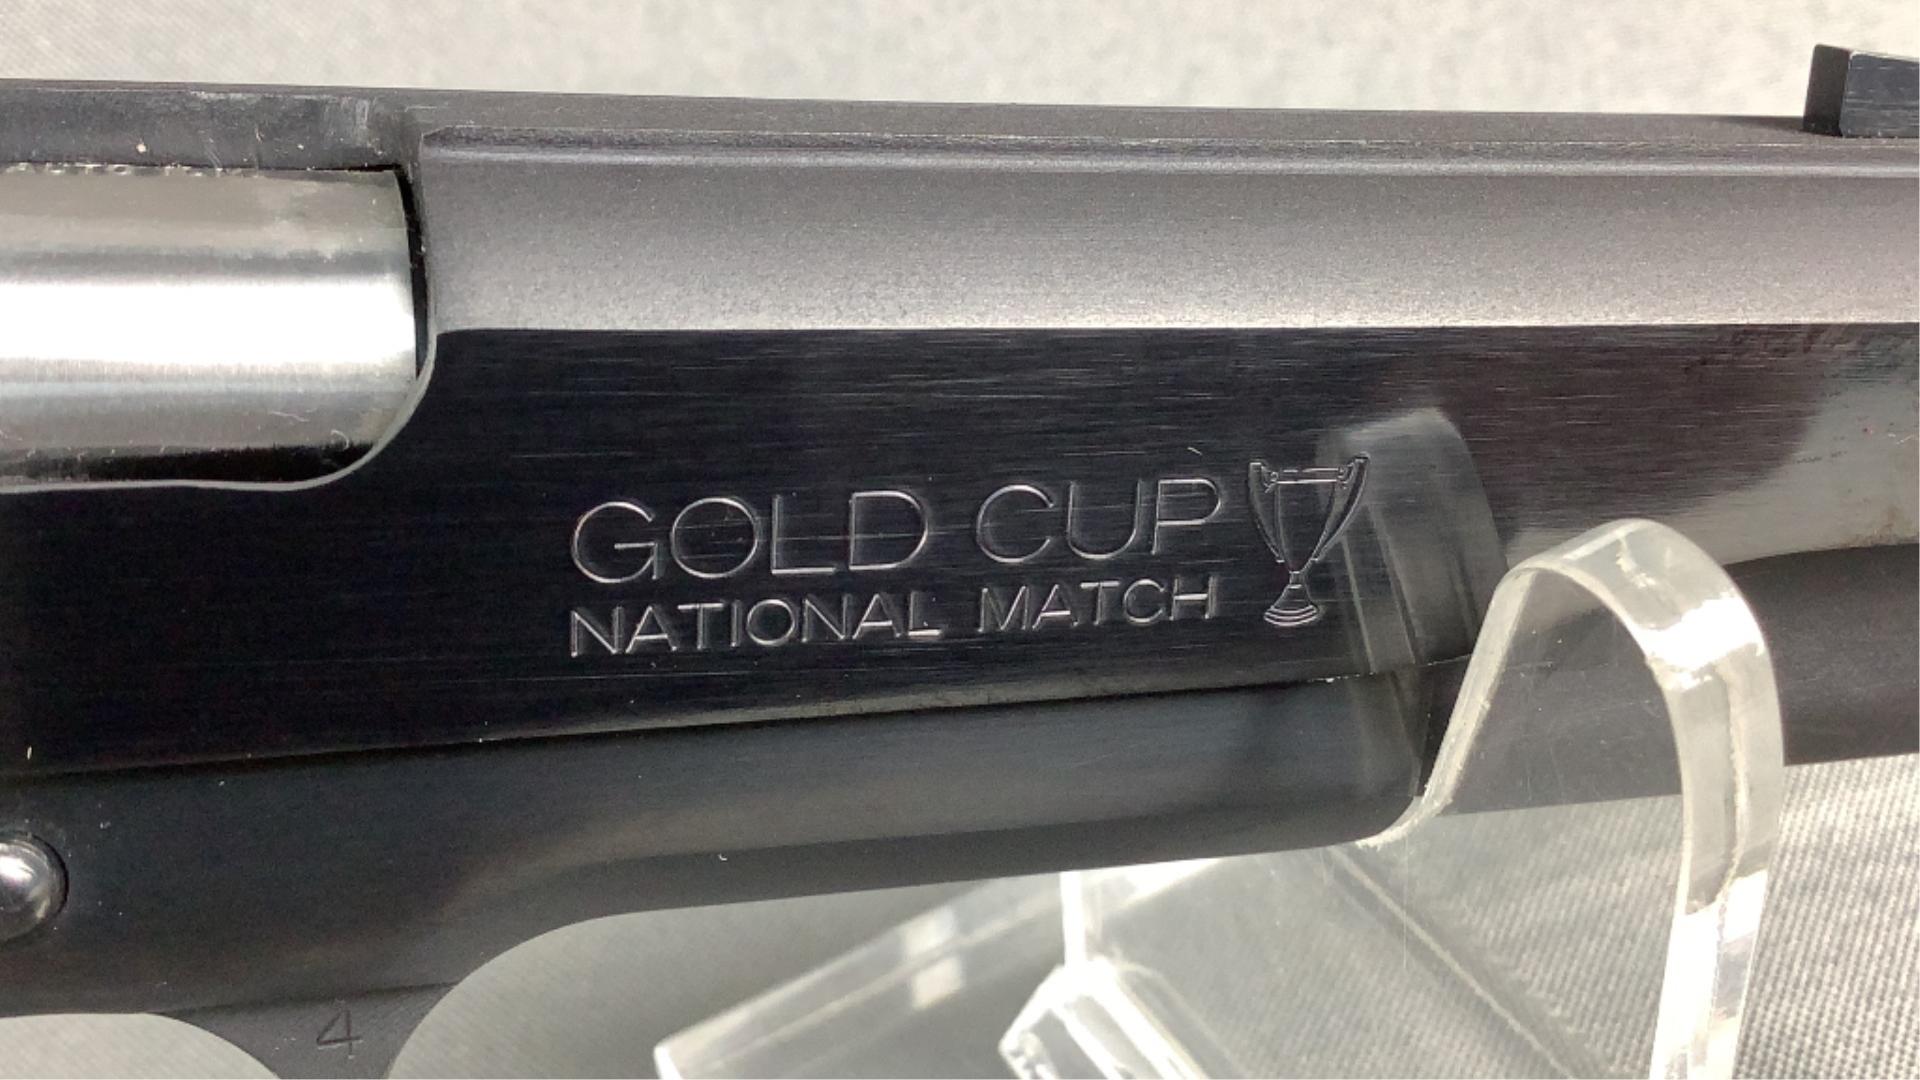 Colt Series 80 Mk IV Gold Cup National Match 45 Au